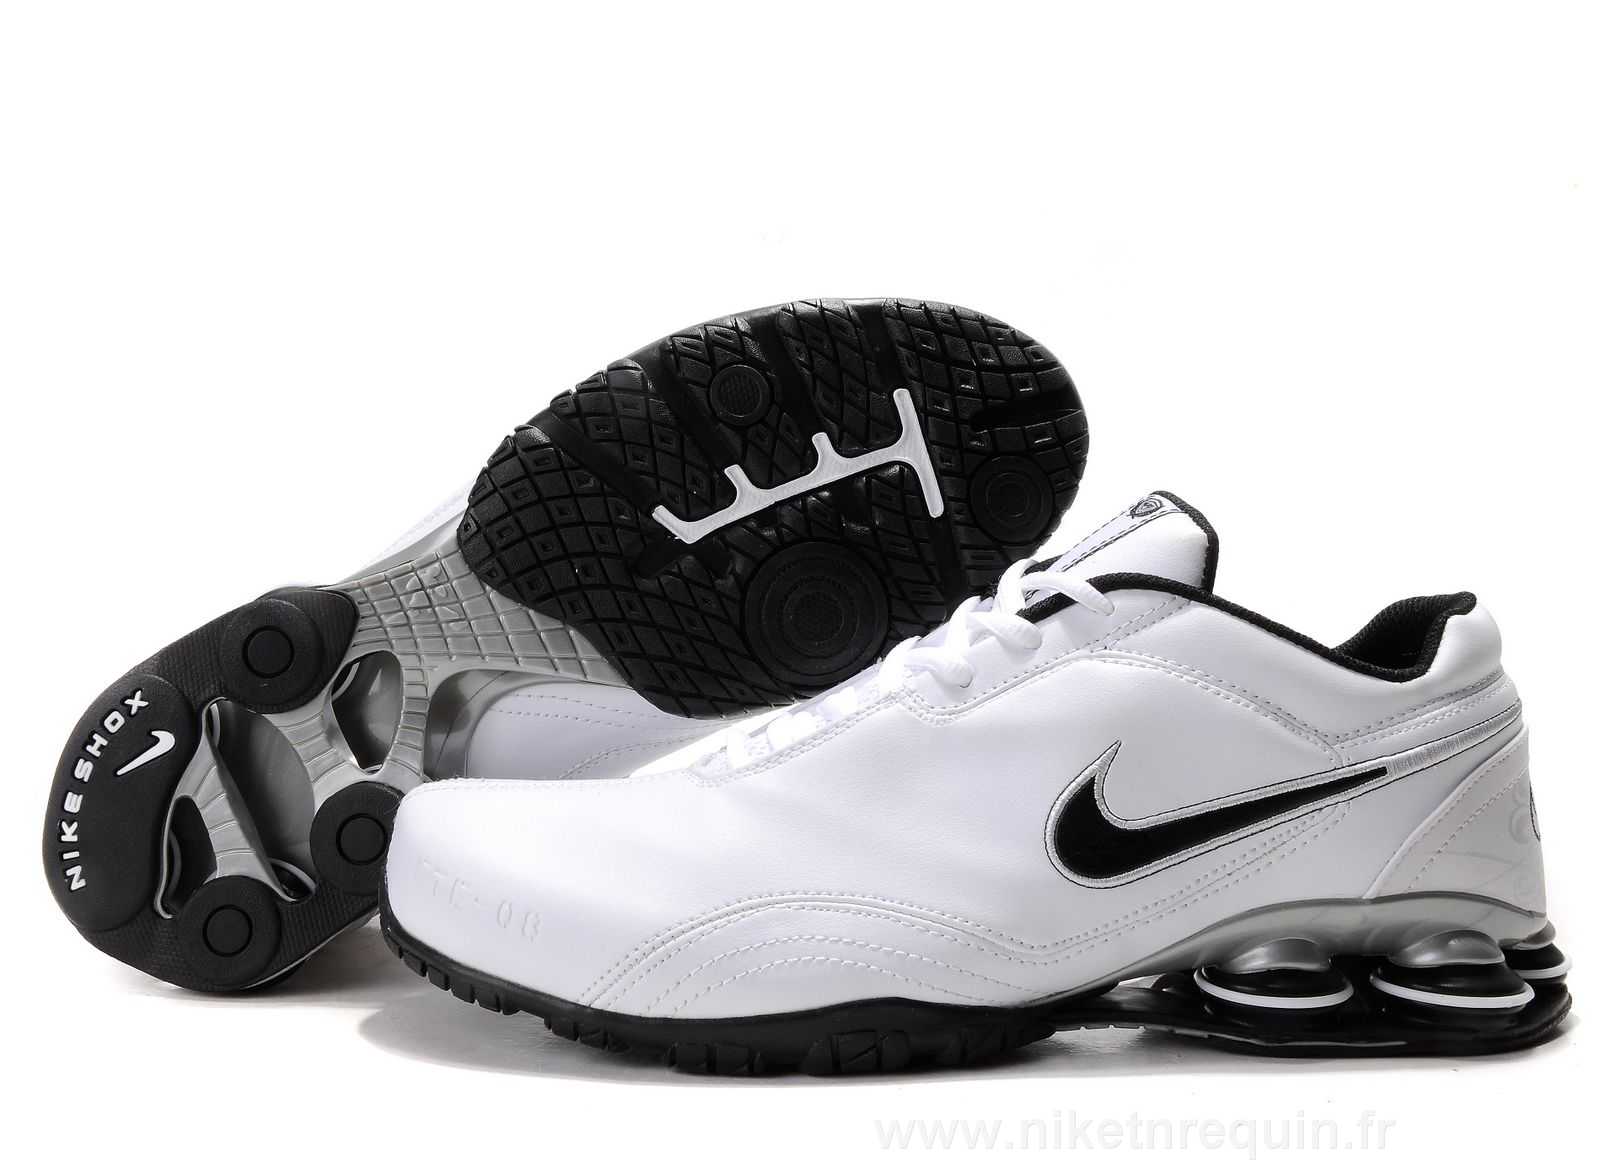 Blanc Et Noir Nike Shox R5